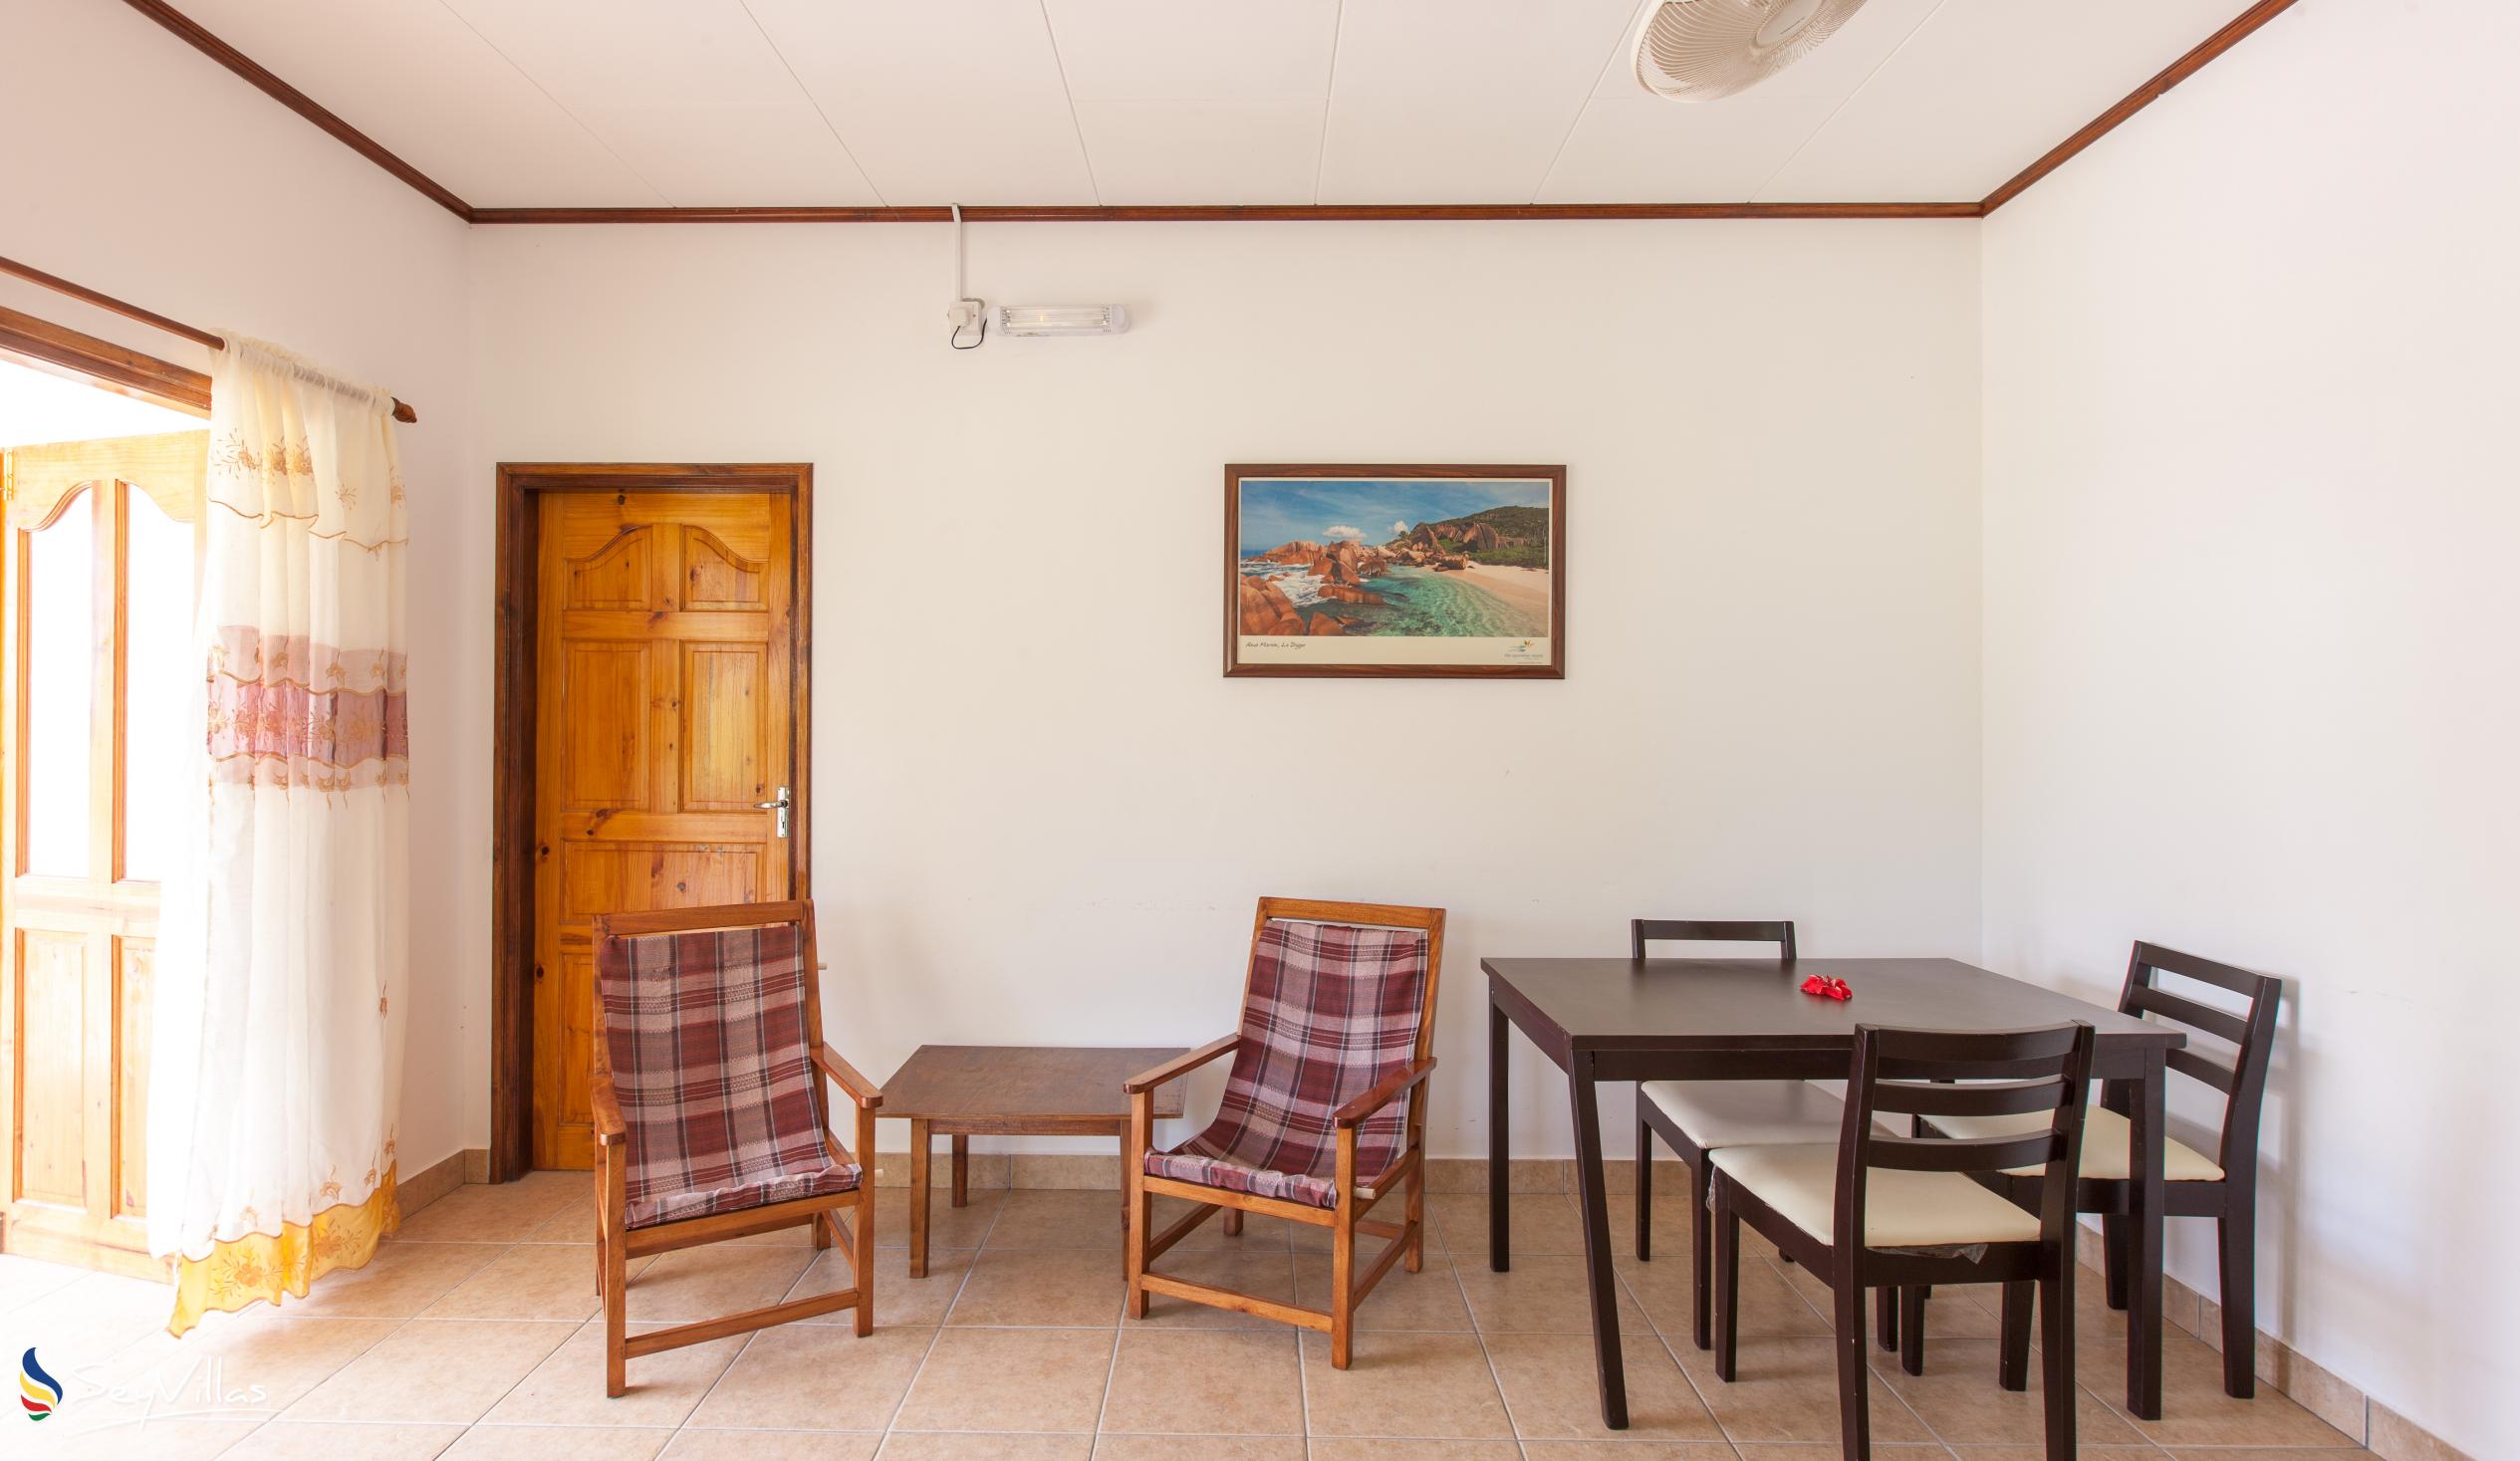 Foto 10: Zerof Self Catering  Apartments - Appartement à 1 chambre - La Digue (Seychelles)